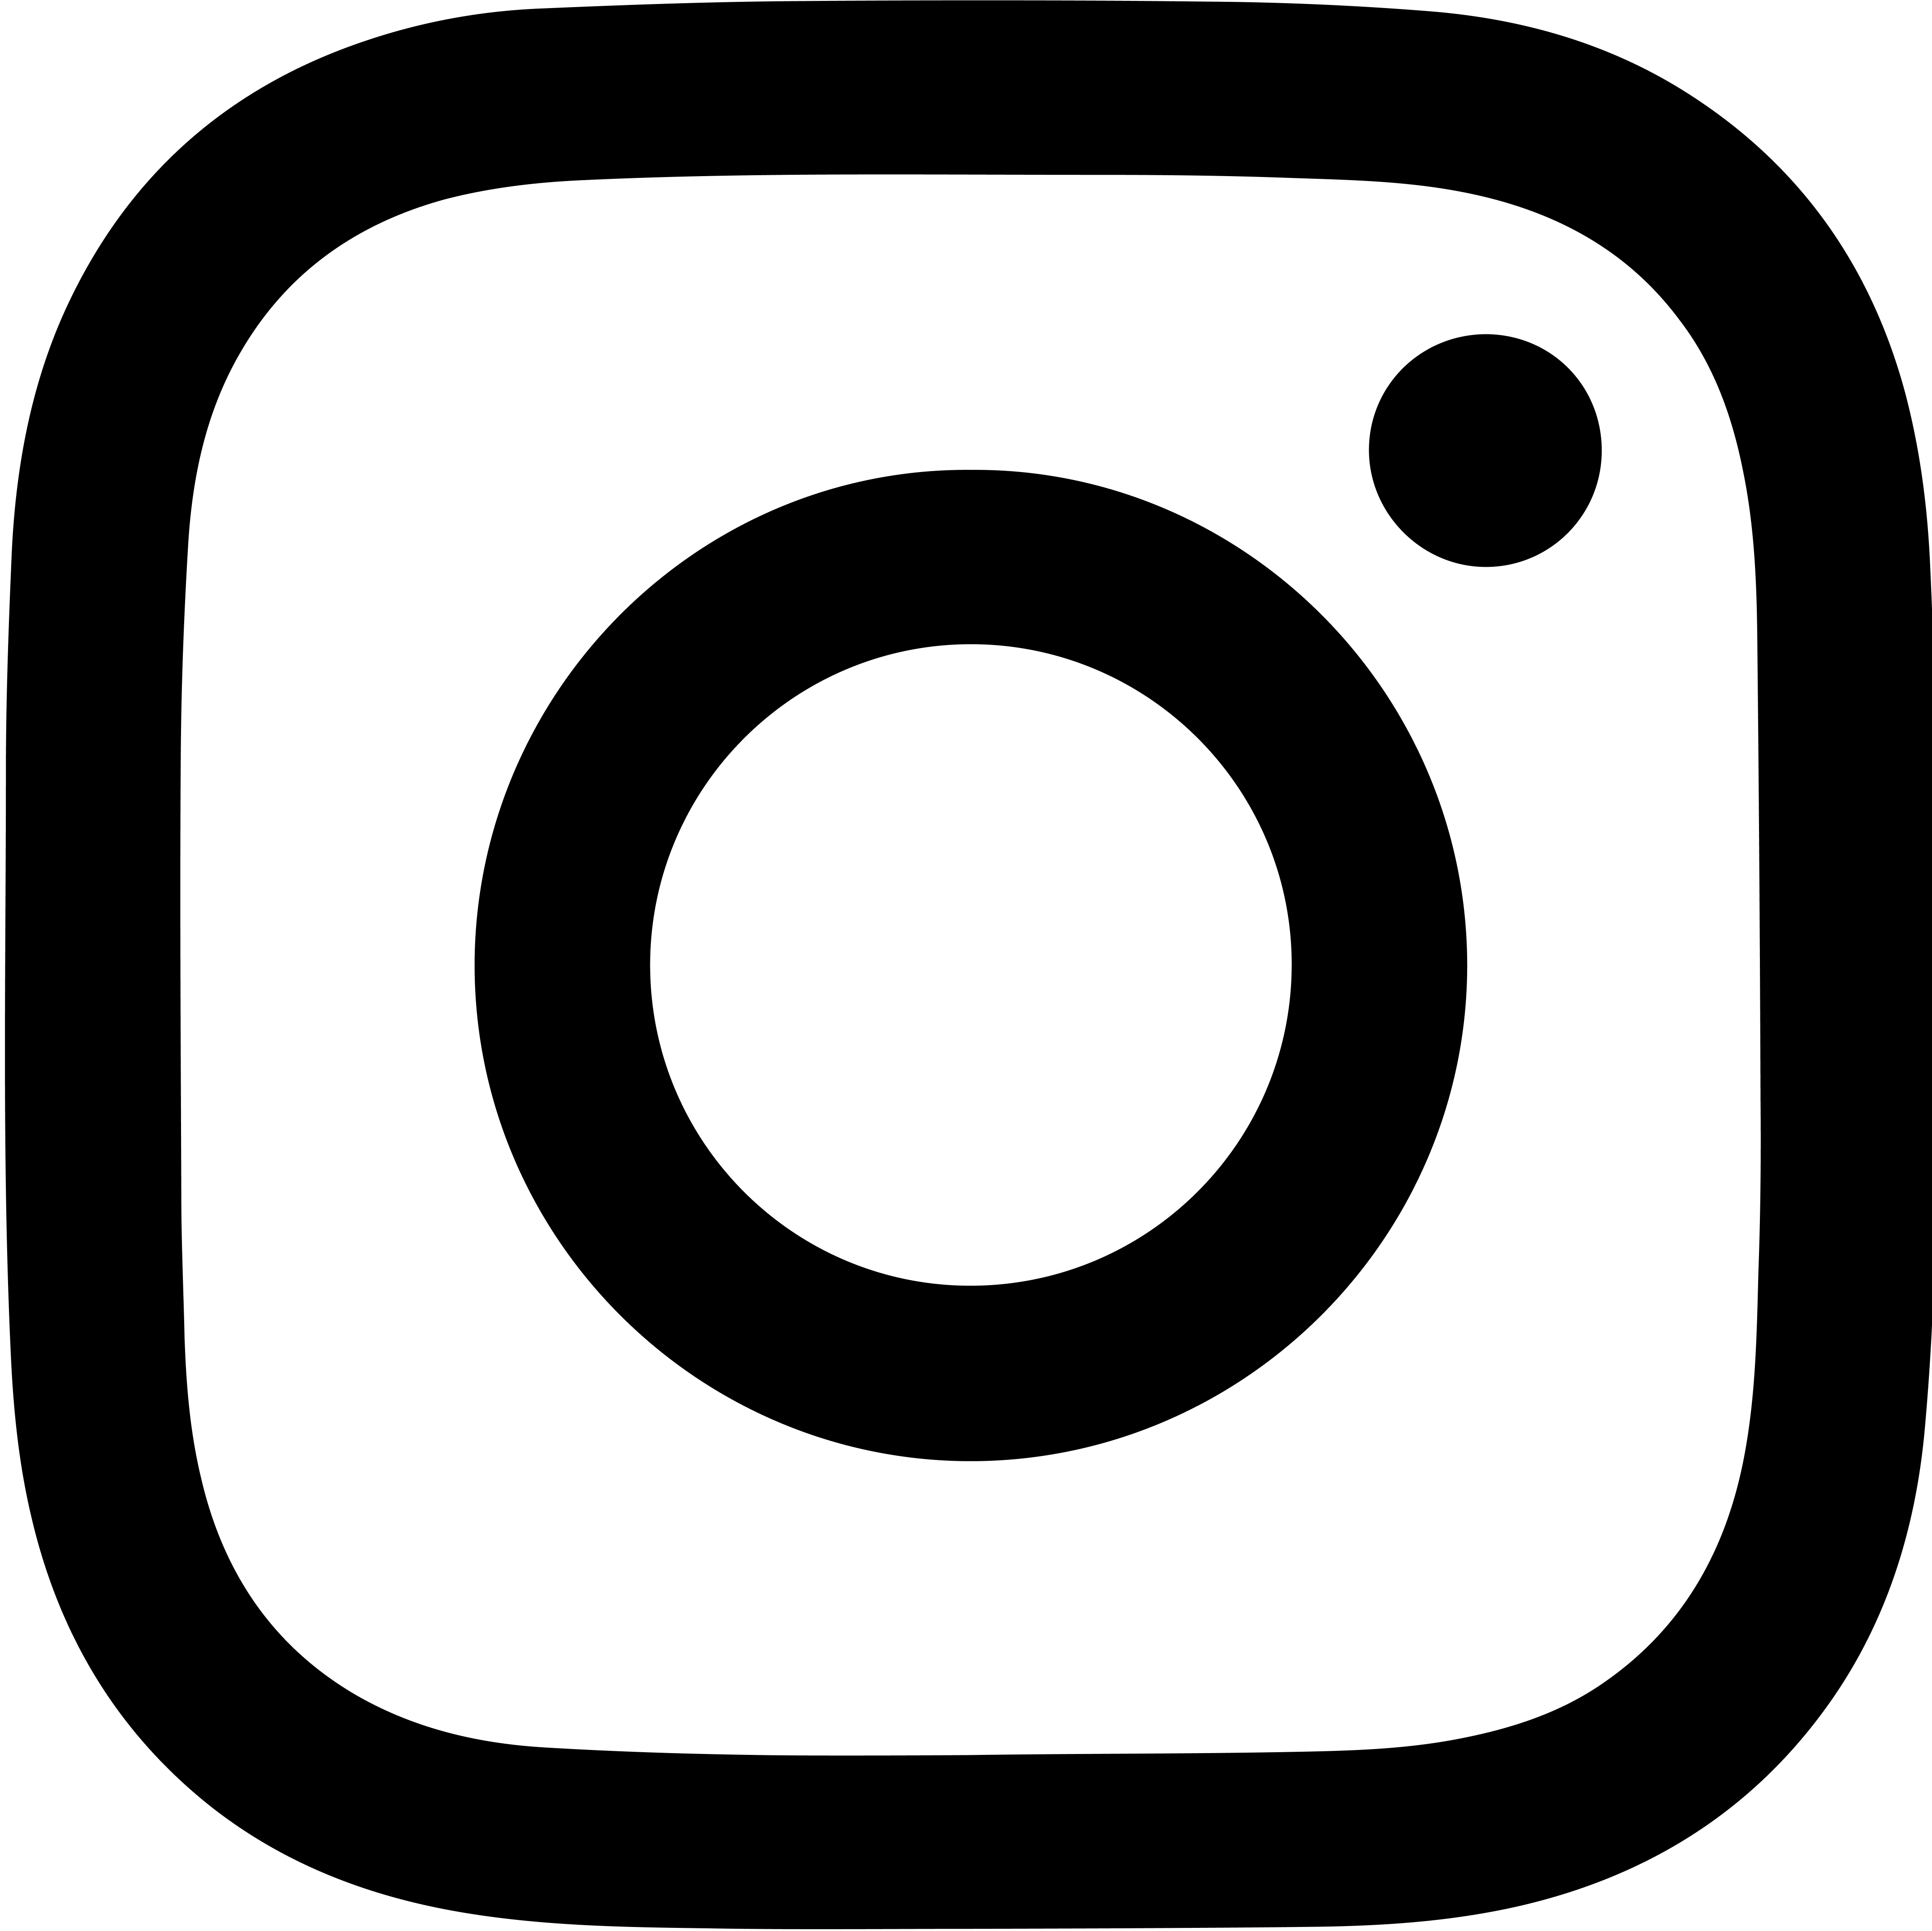 Instagram's black glyph logo